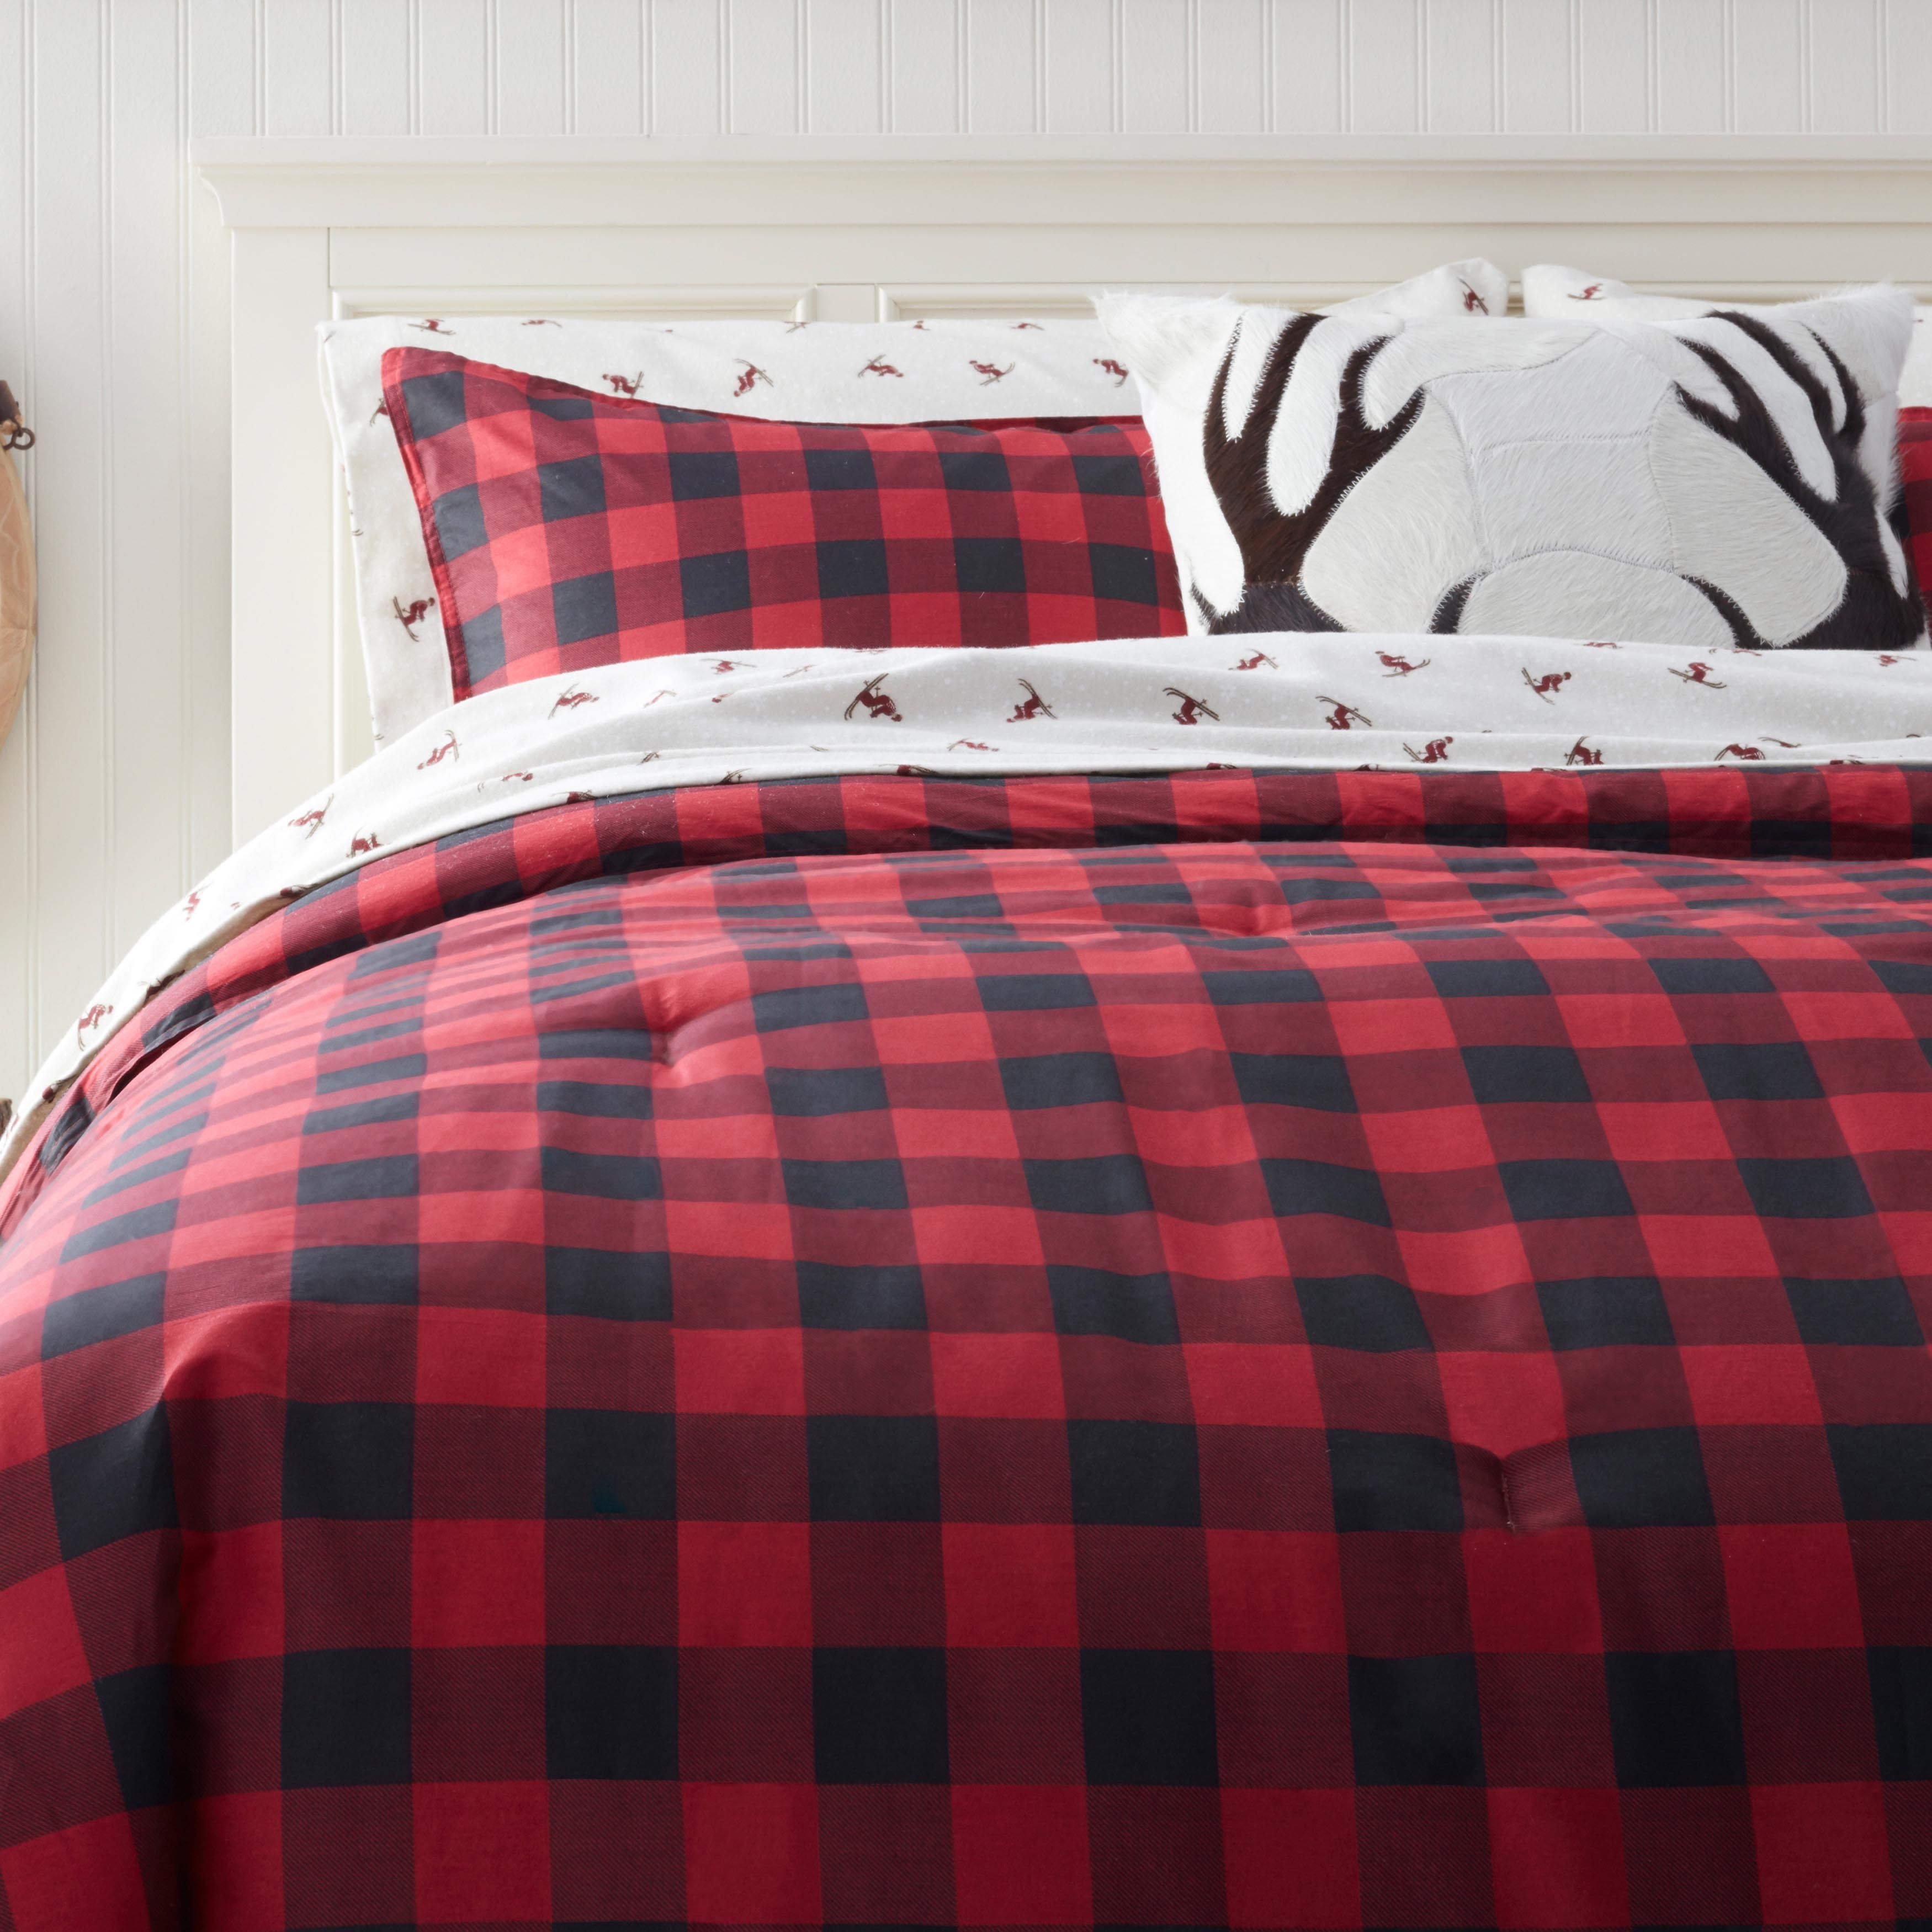 Eddie Bauer Mountain Plaid Comforter, Red Plaid Bedding King